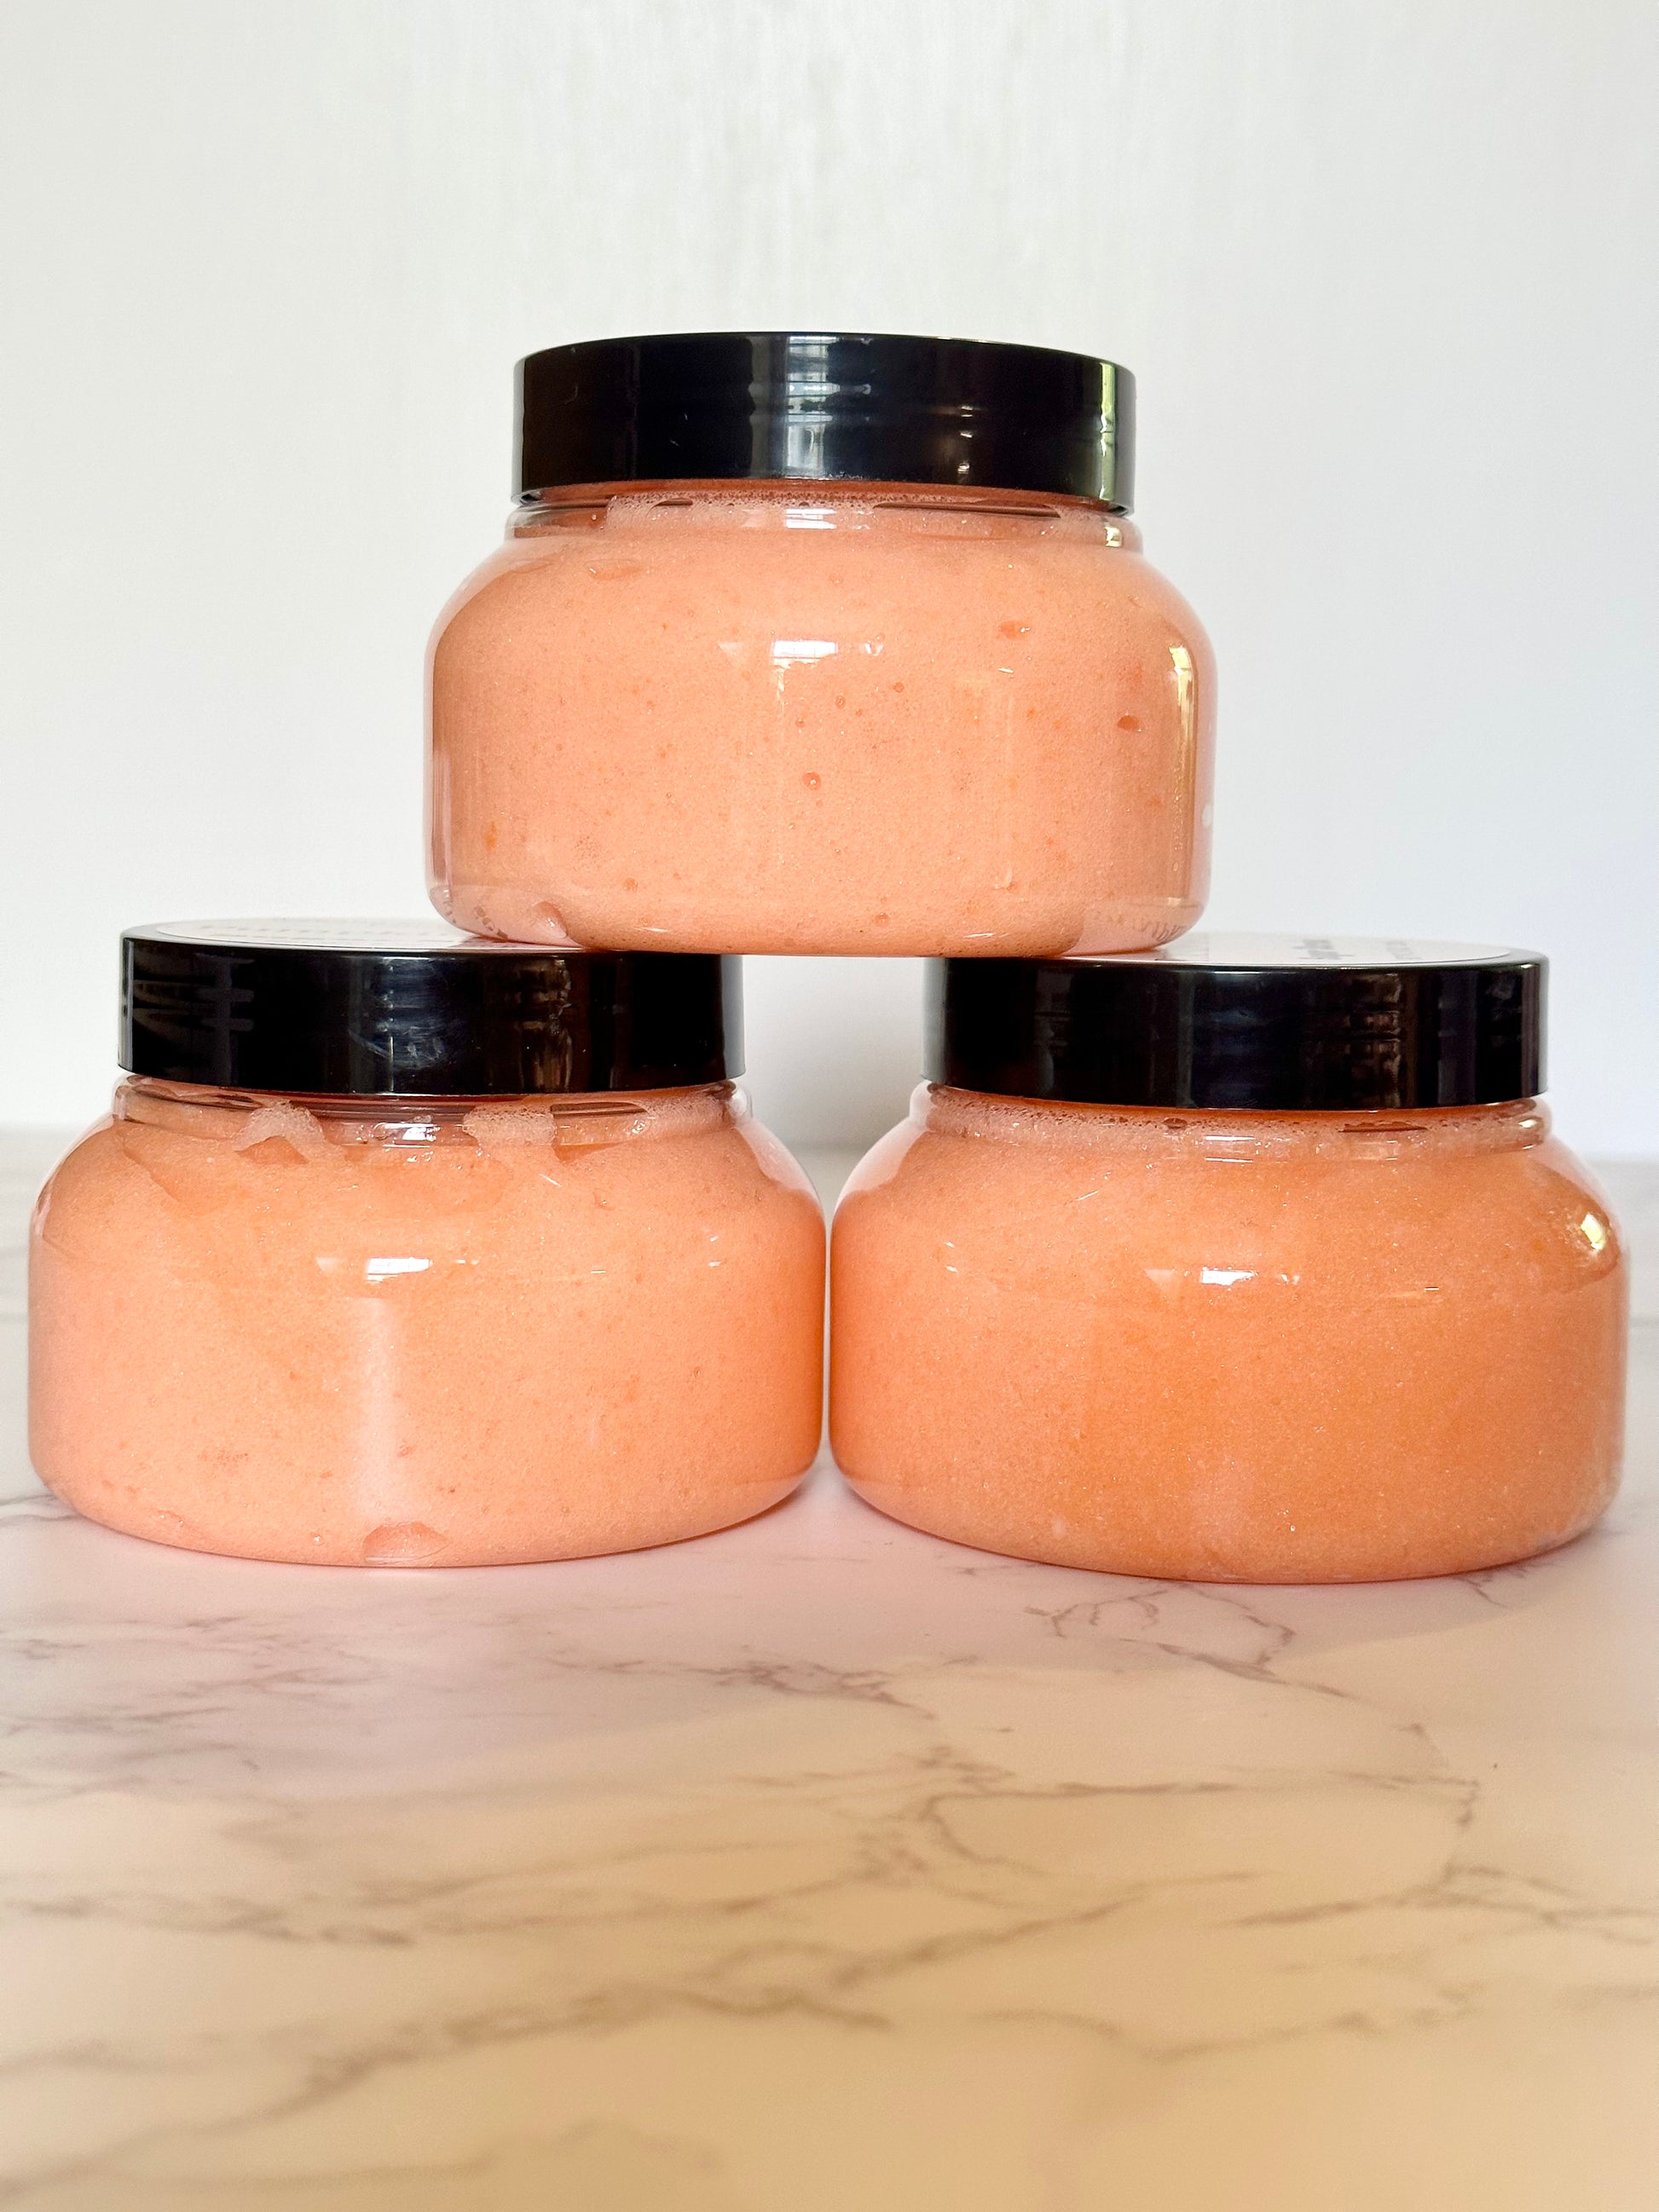 Pumpkin Spice Sugar Scrubs - Cahaba Soap and Candle Company